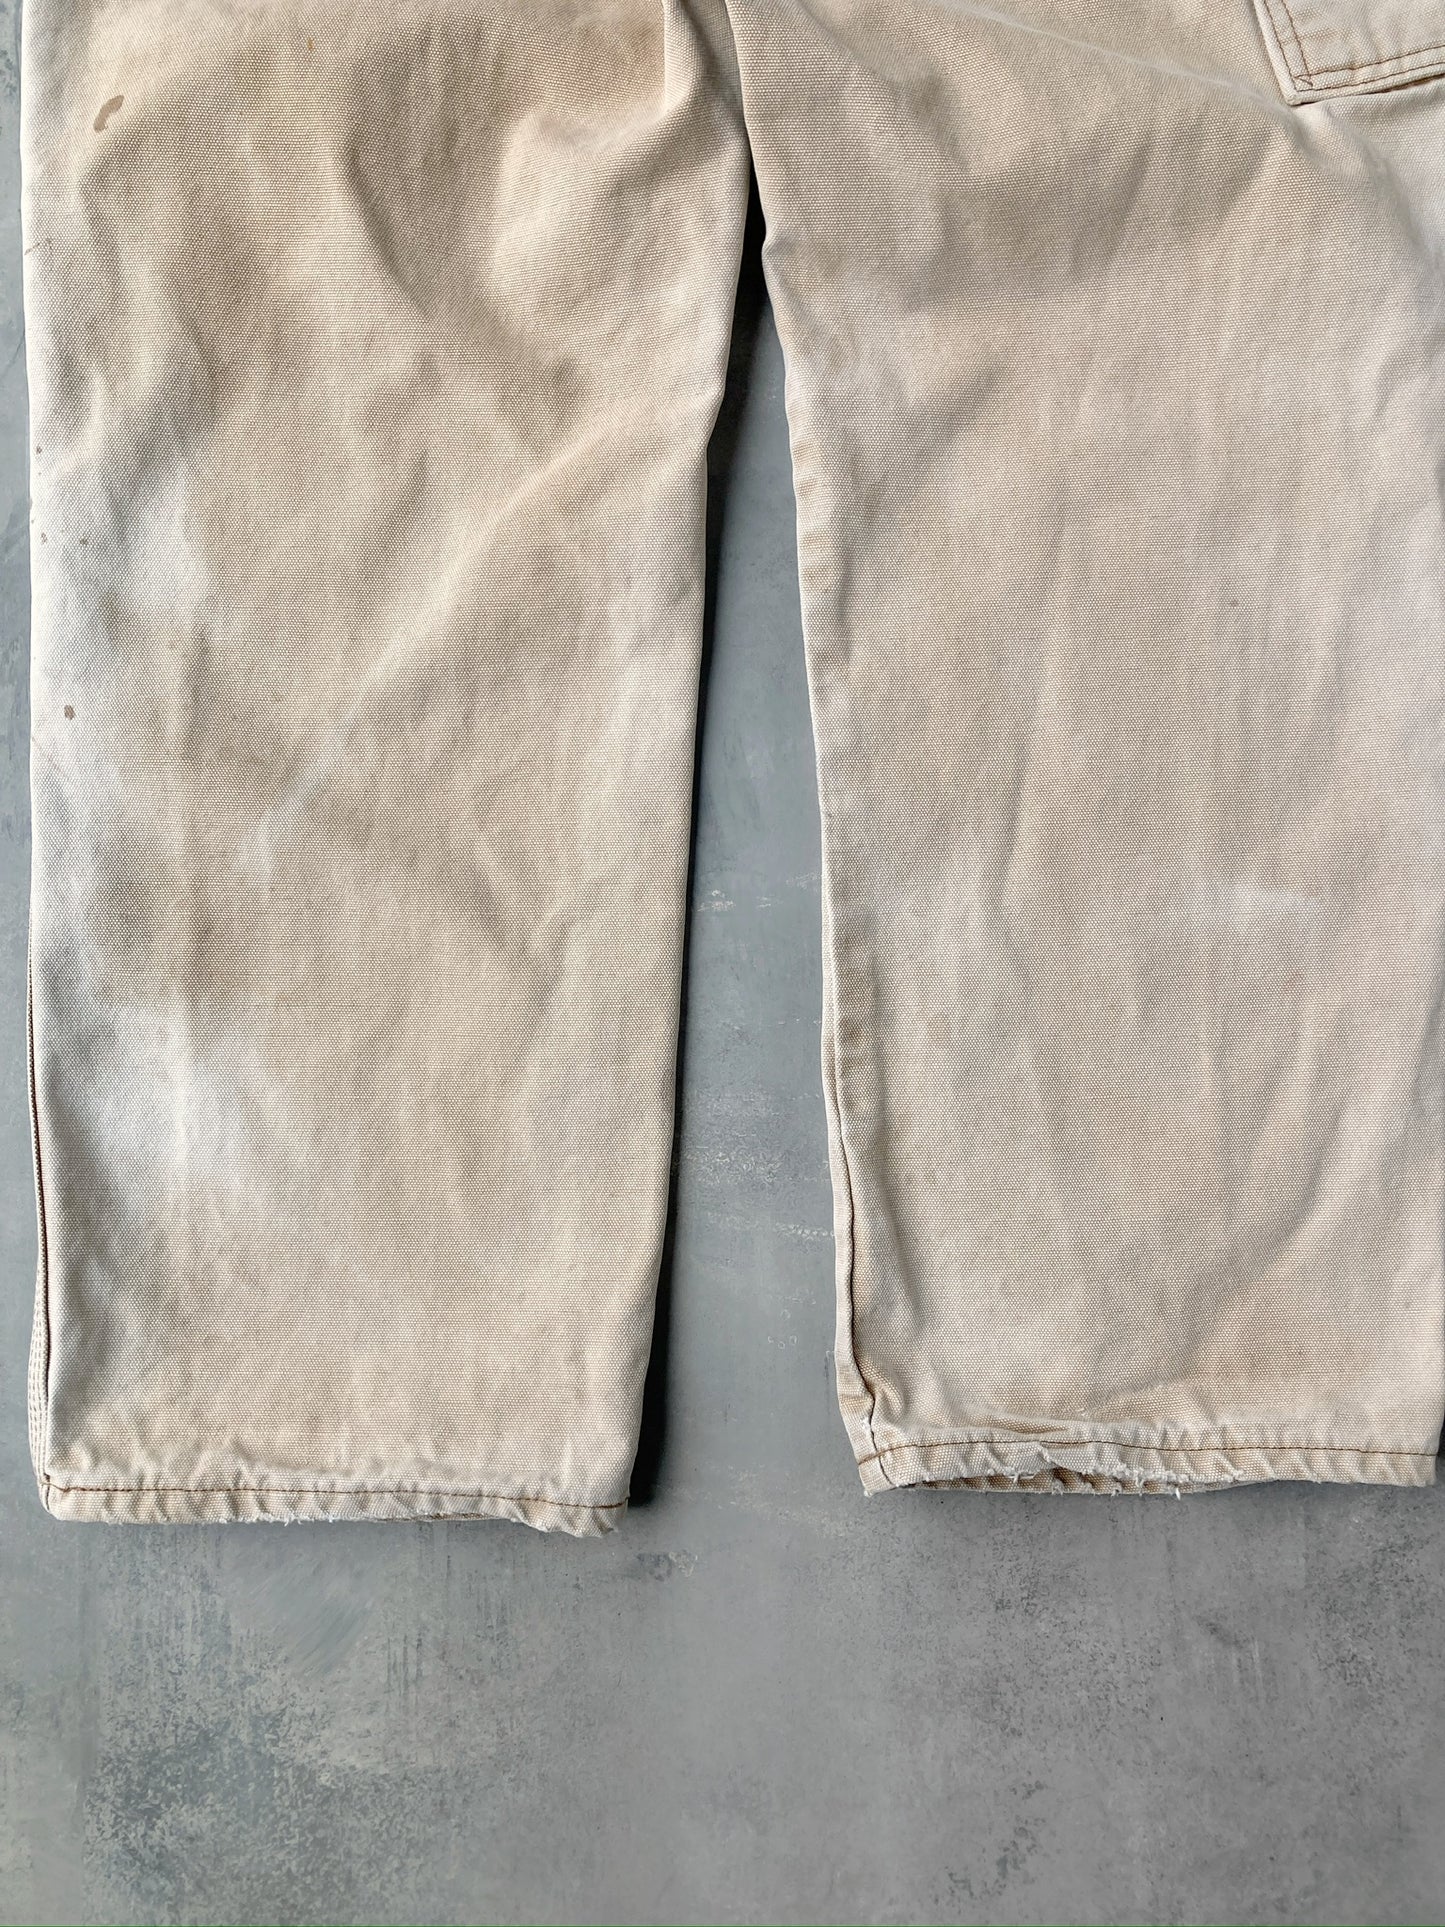 Dickies Distressed Canvas Pants '12 - 33 x 30